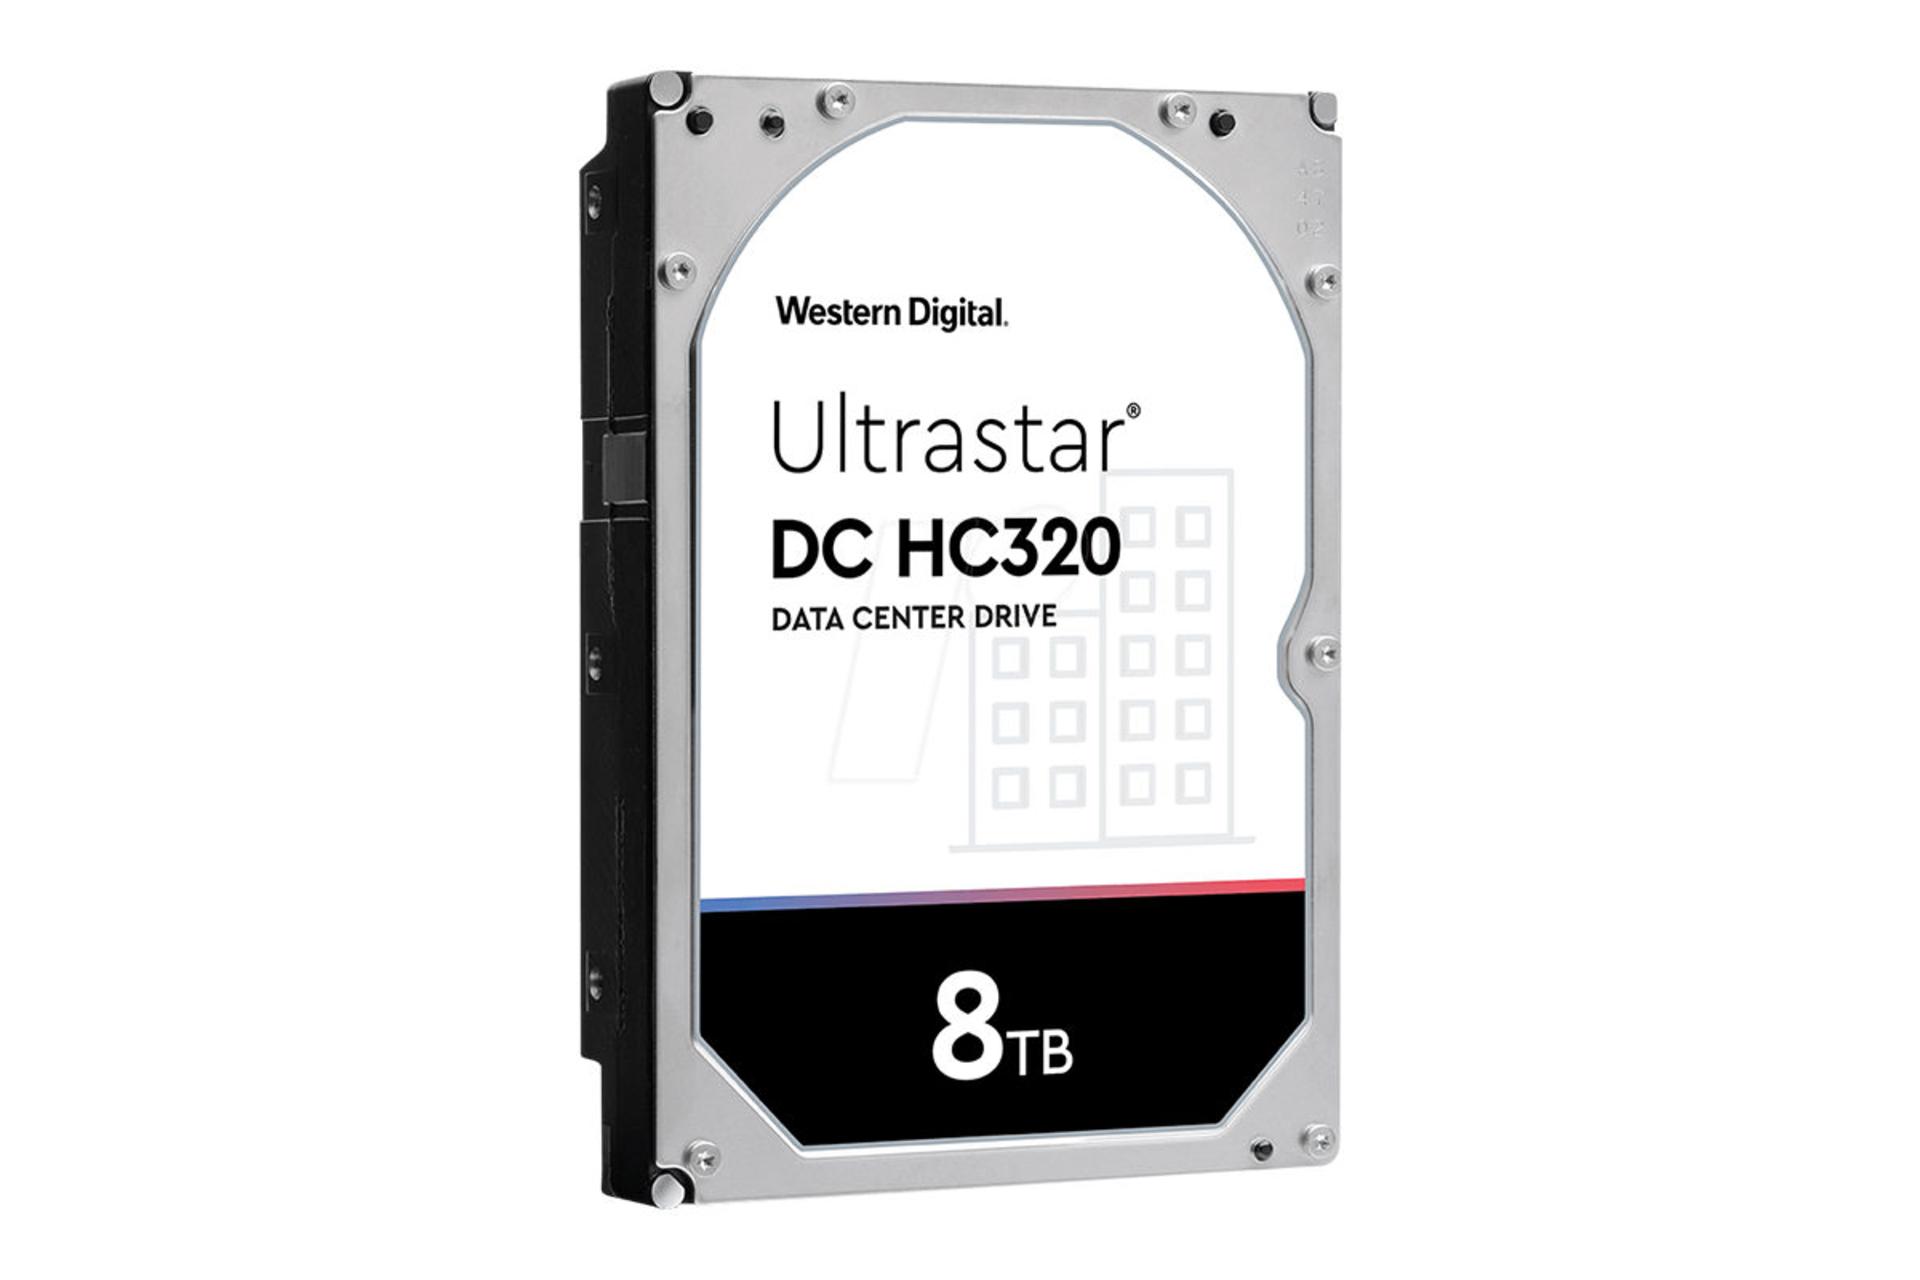 وسترن دیجیتال Ultrastar 0B36404 ظرفیت 8 ترابایت / Western Digital Ultrastar 0B36404 8TB